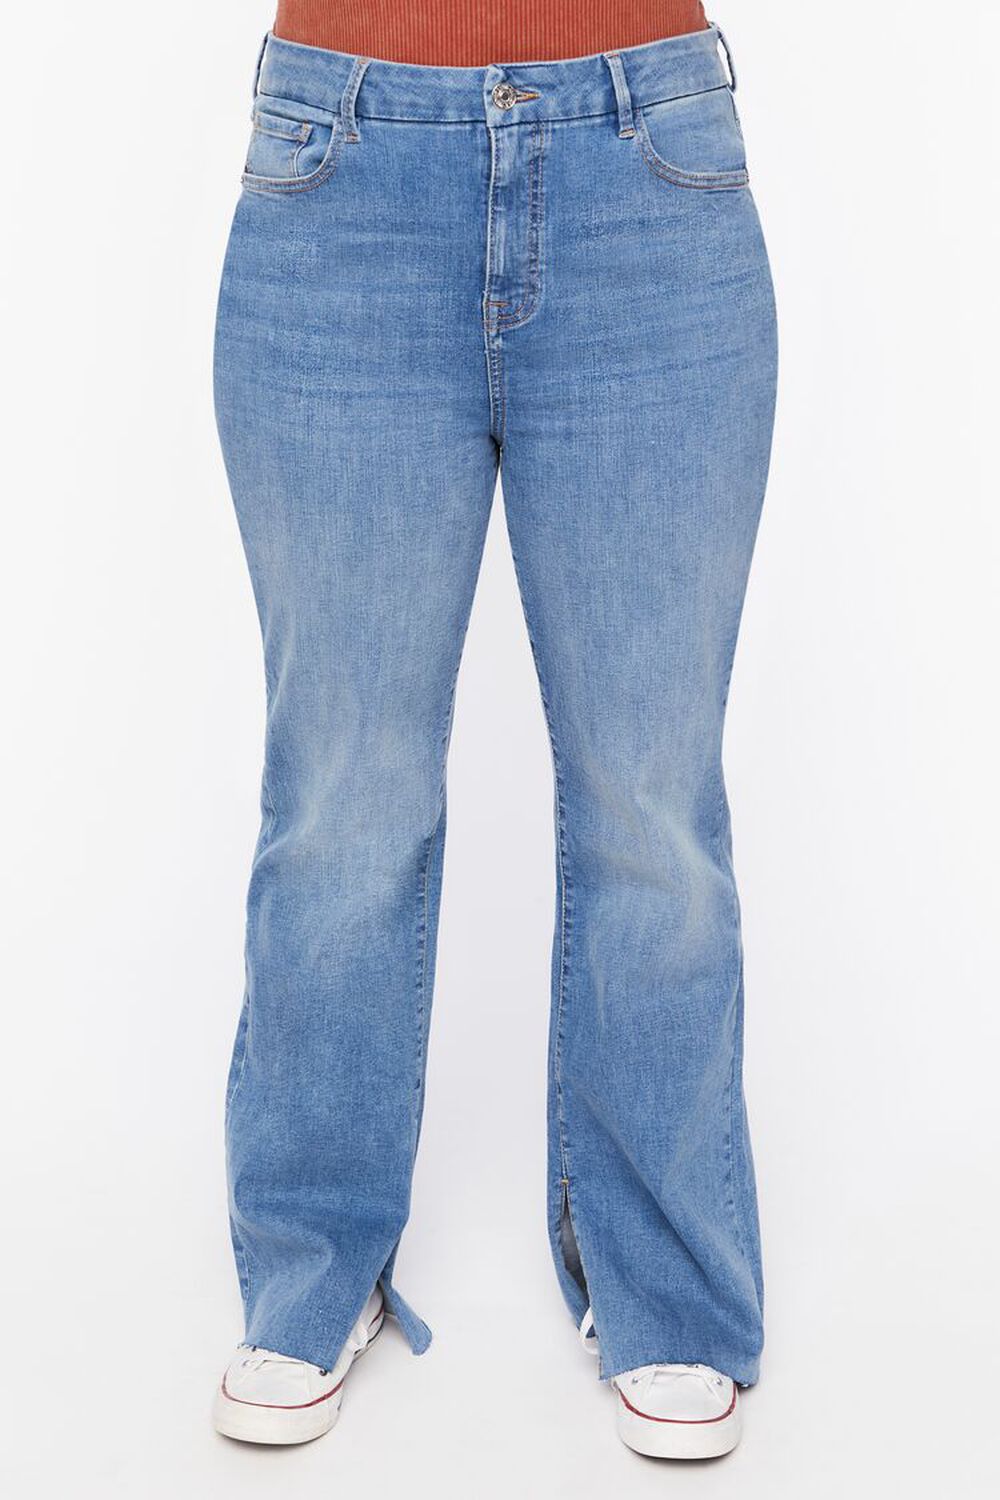 LIGHT DENIM Plus Size High-Rise Bootcut Jeans, image 2